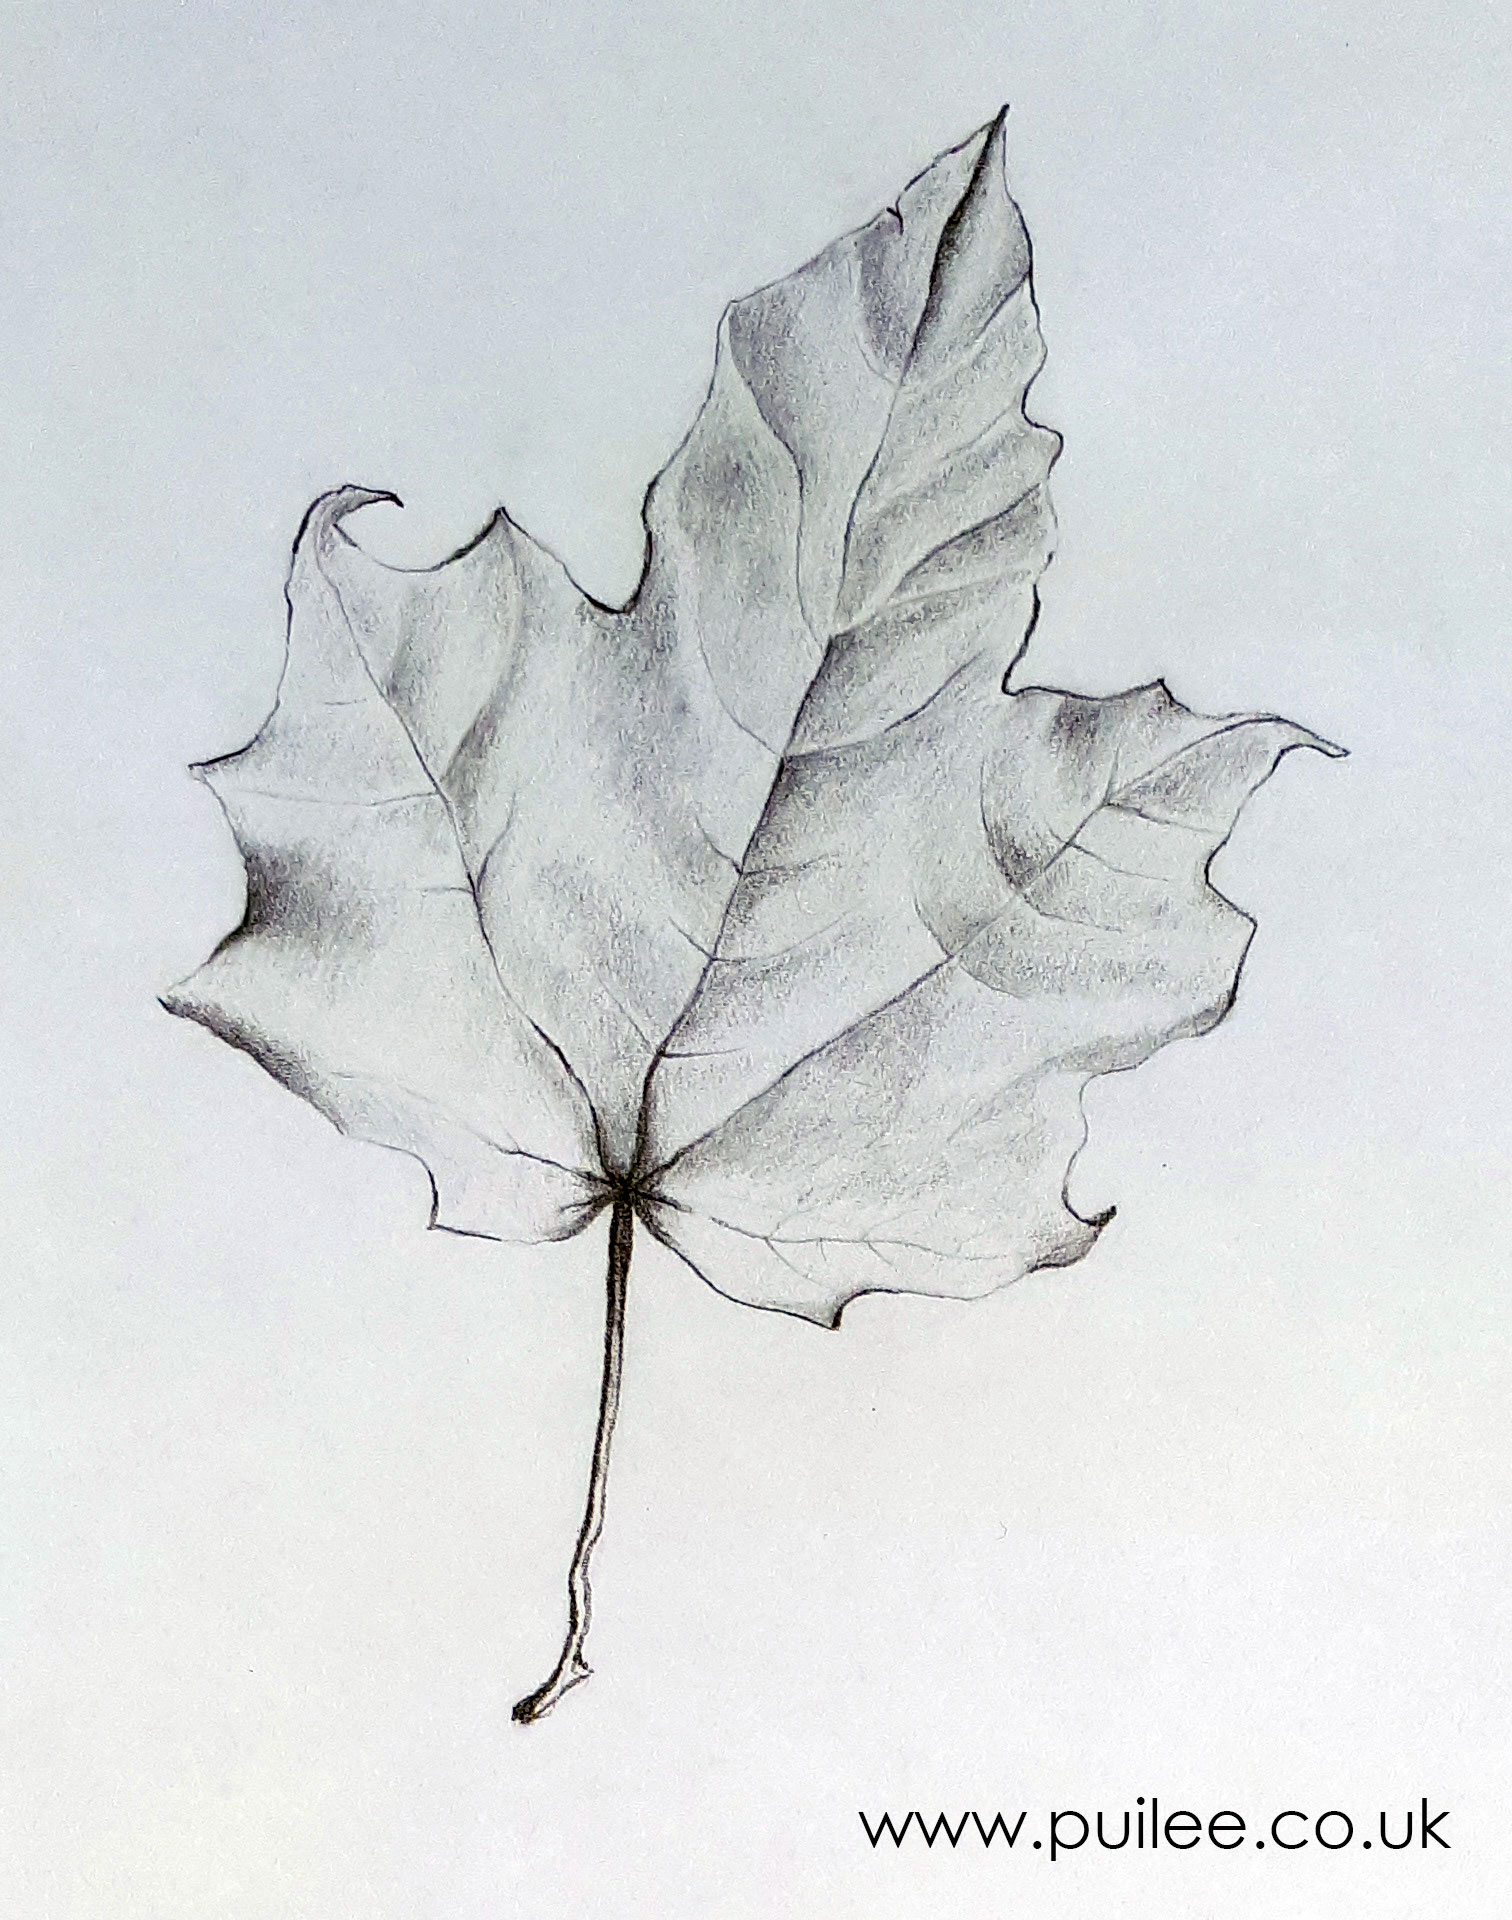 Leaf (2020) pencil on paper by Artist Pui Lee